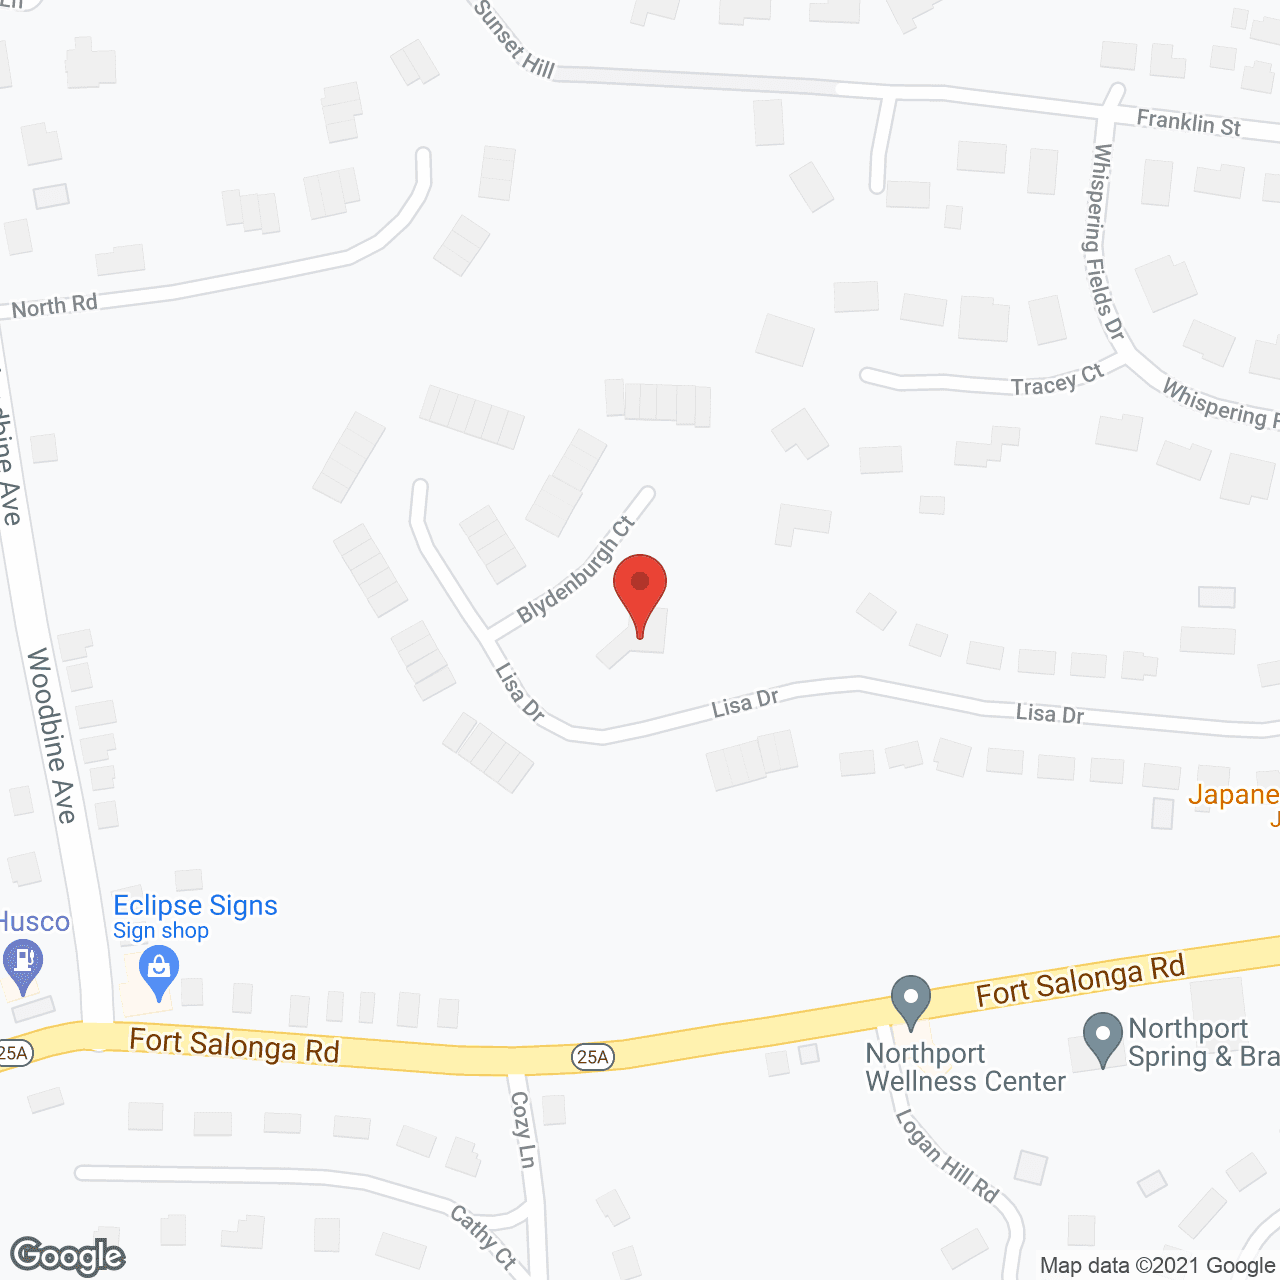 Dawn Hill Manor in google map